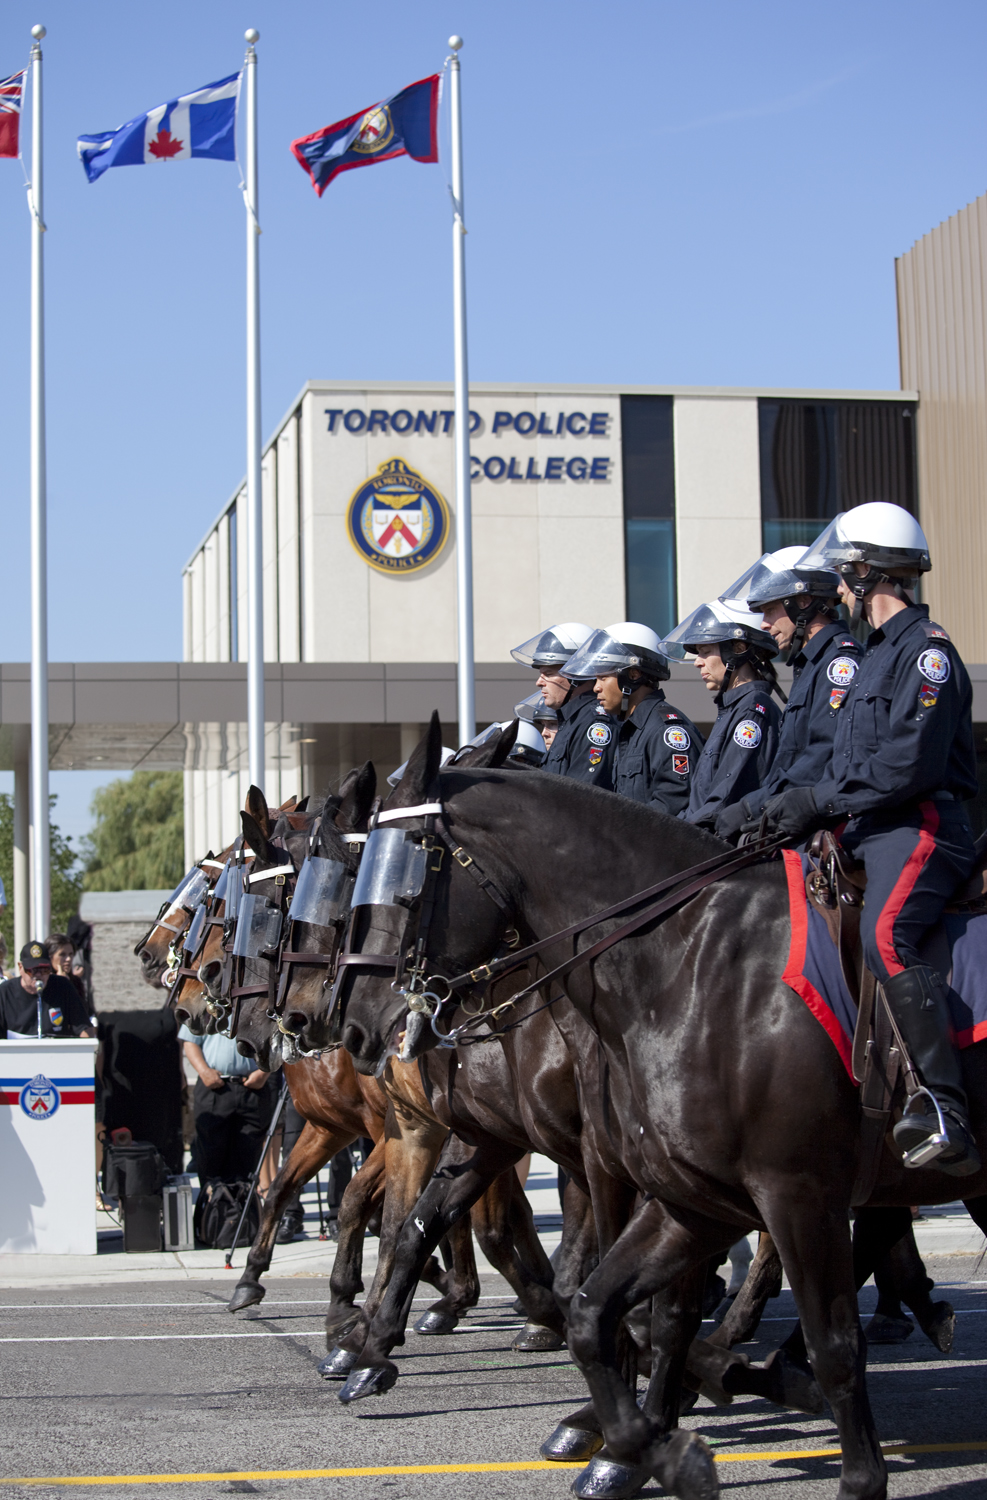 Toronto Police College | police | 70 Birmingham St, Etobicoke, ON M8V 2Z5, Canada | 4168084800 OR +1 416-808-4800